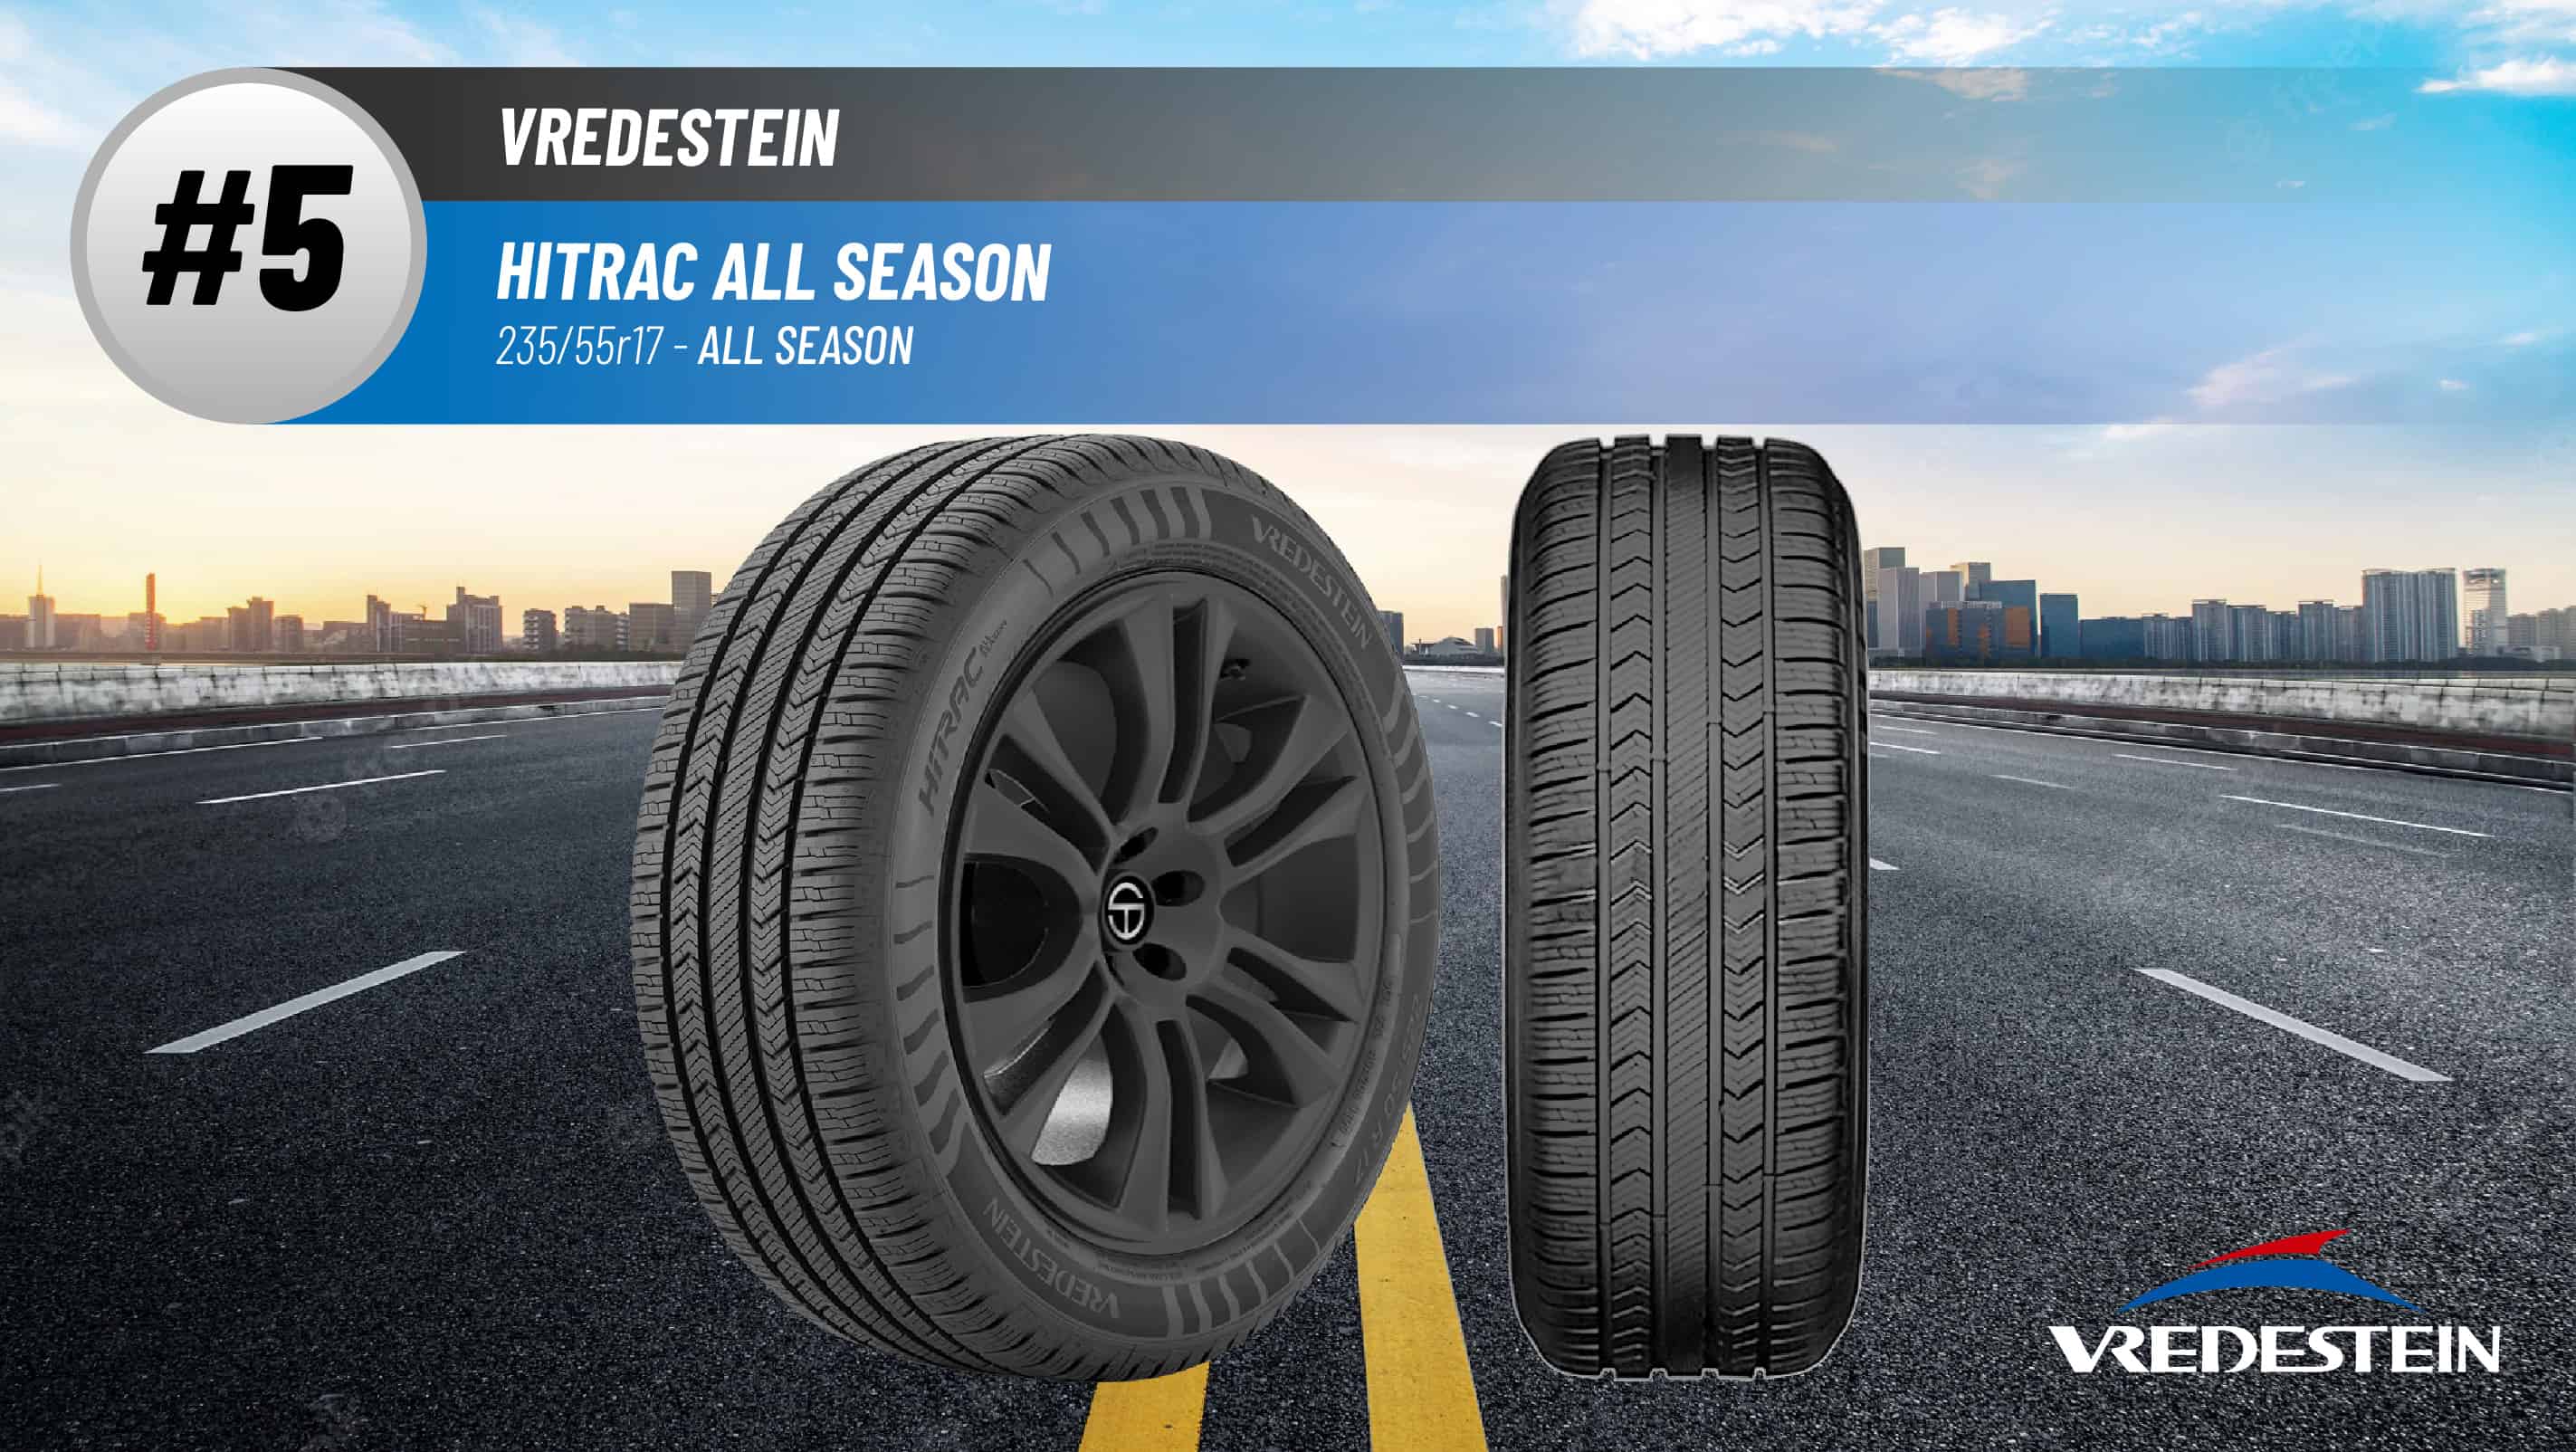 Top #5 All Season Tires: Vredestein Hitrac All Season – best 235/55r17